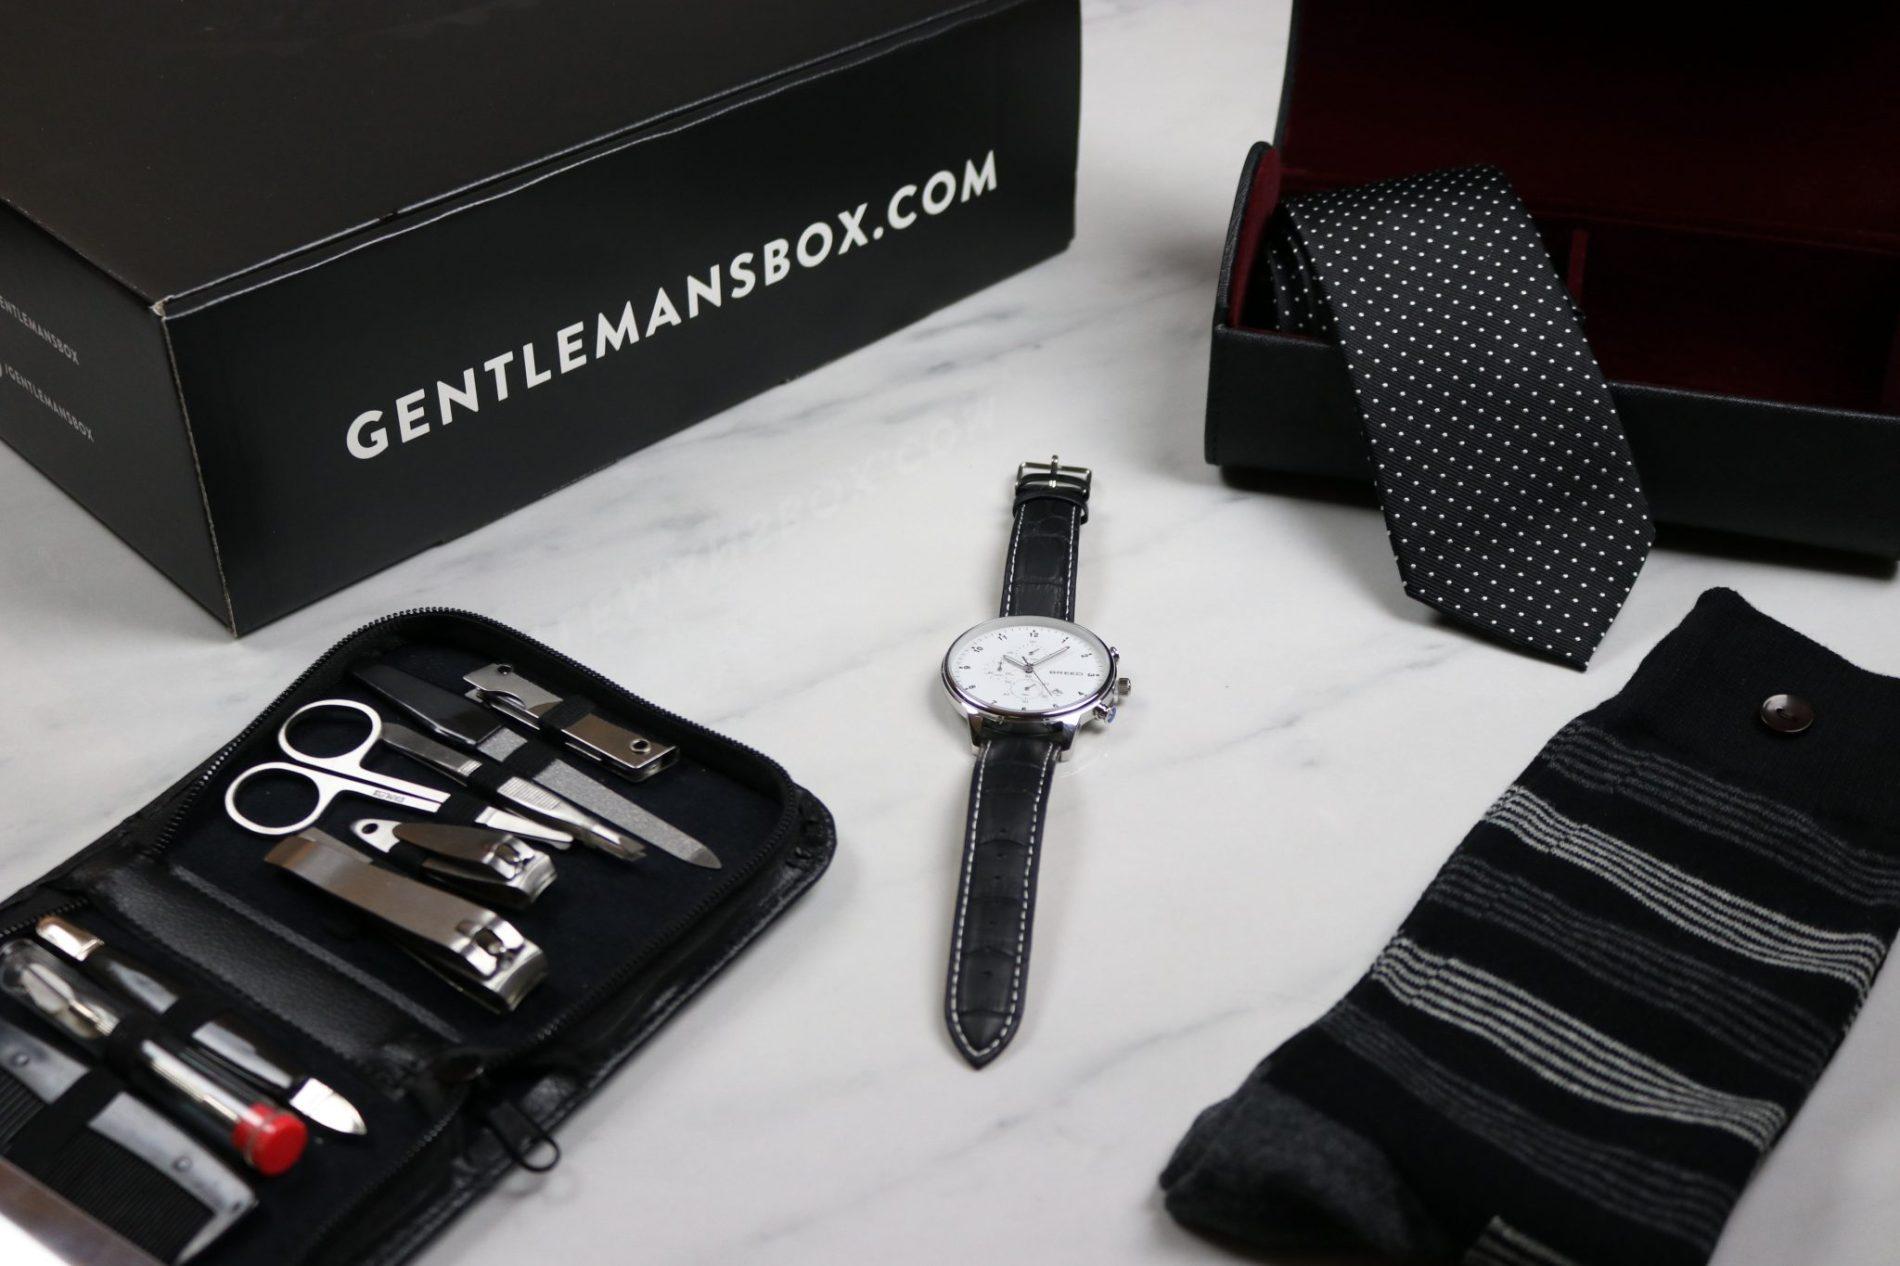 Gentleman’s Box “THE FORMAL EDITION” Box – Save $90!